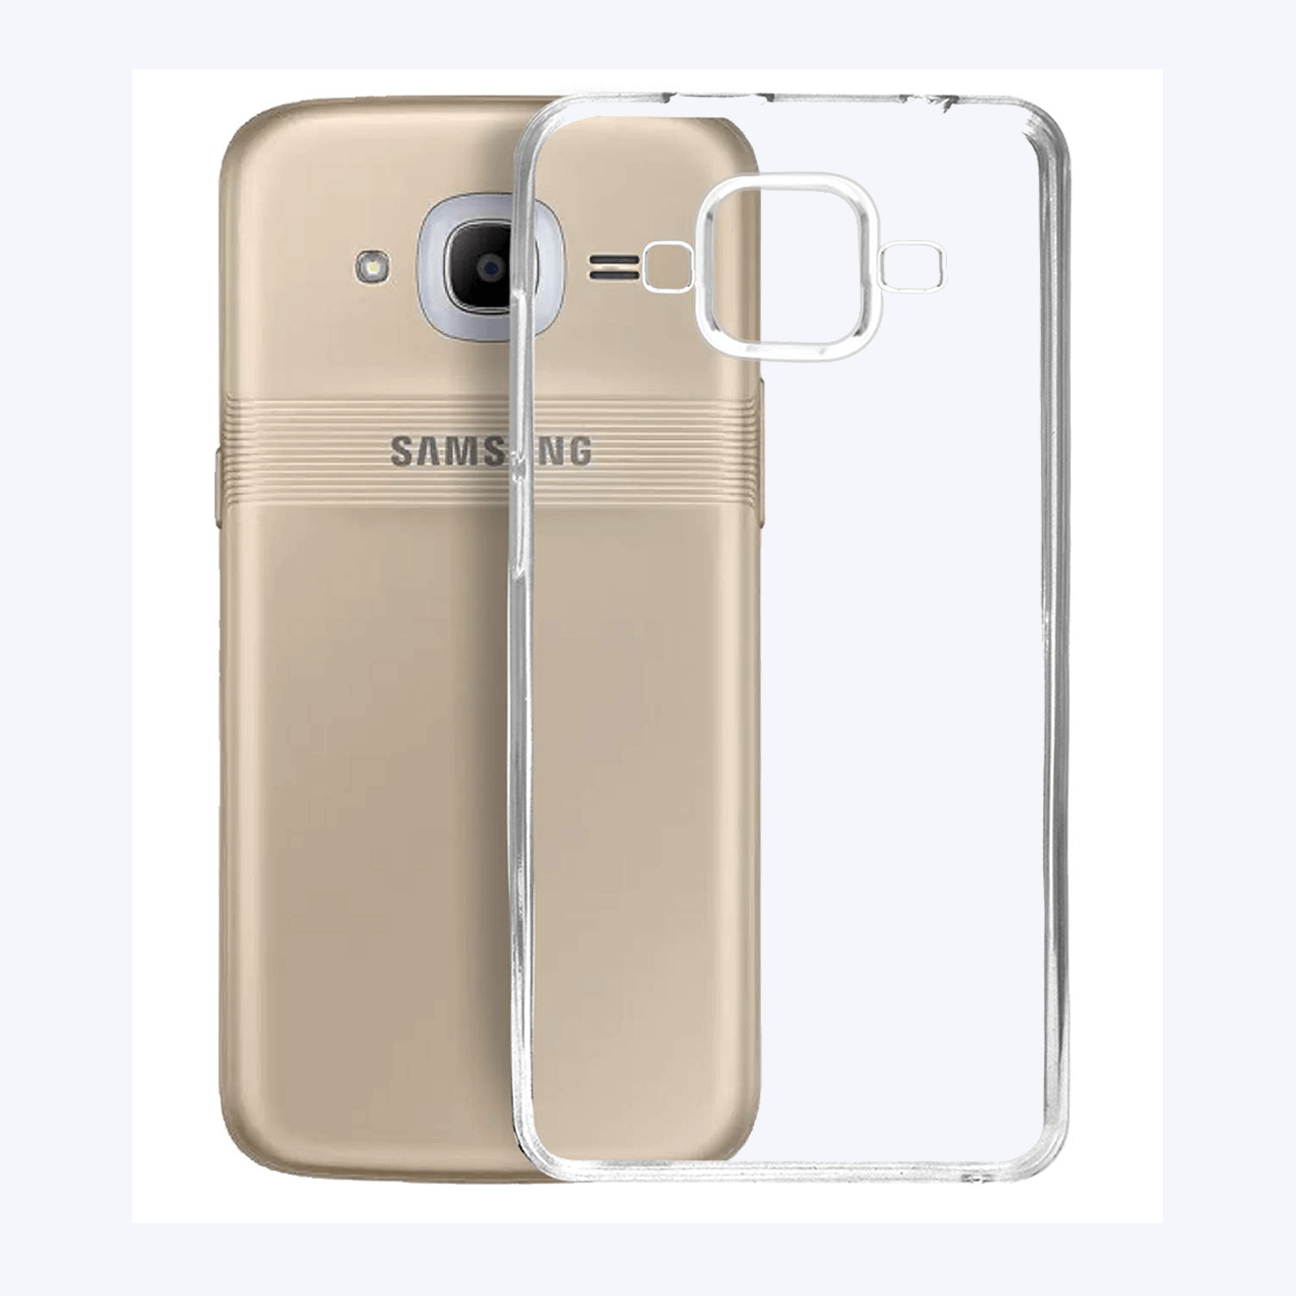 Samsung Galaxy J2 (2016) Transparent Back Cover